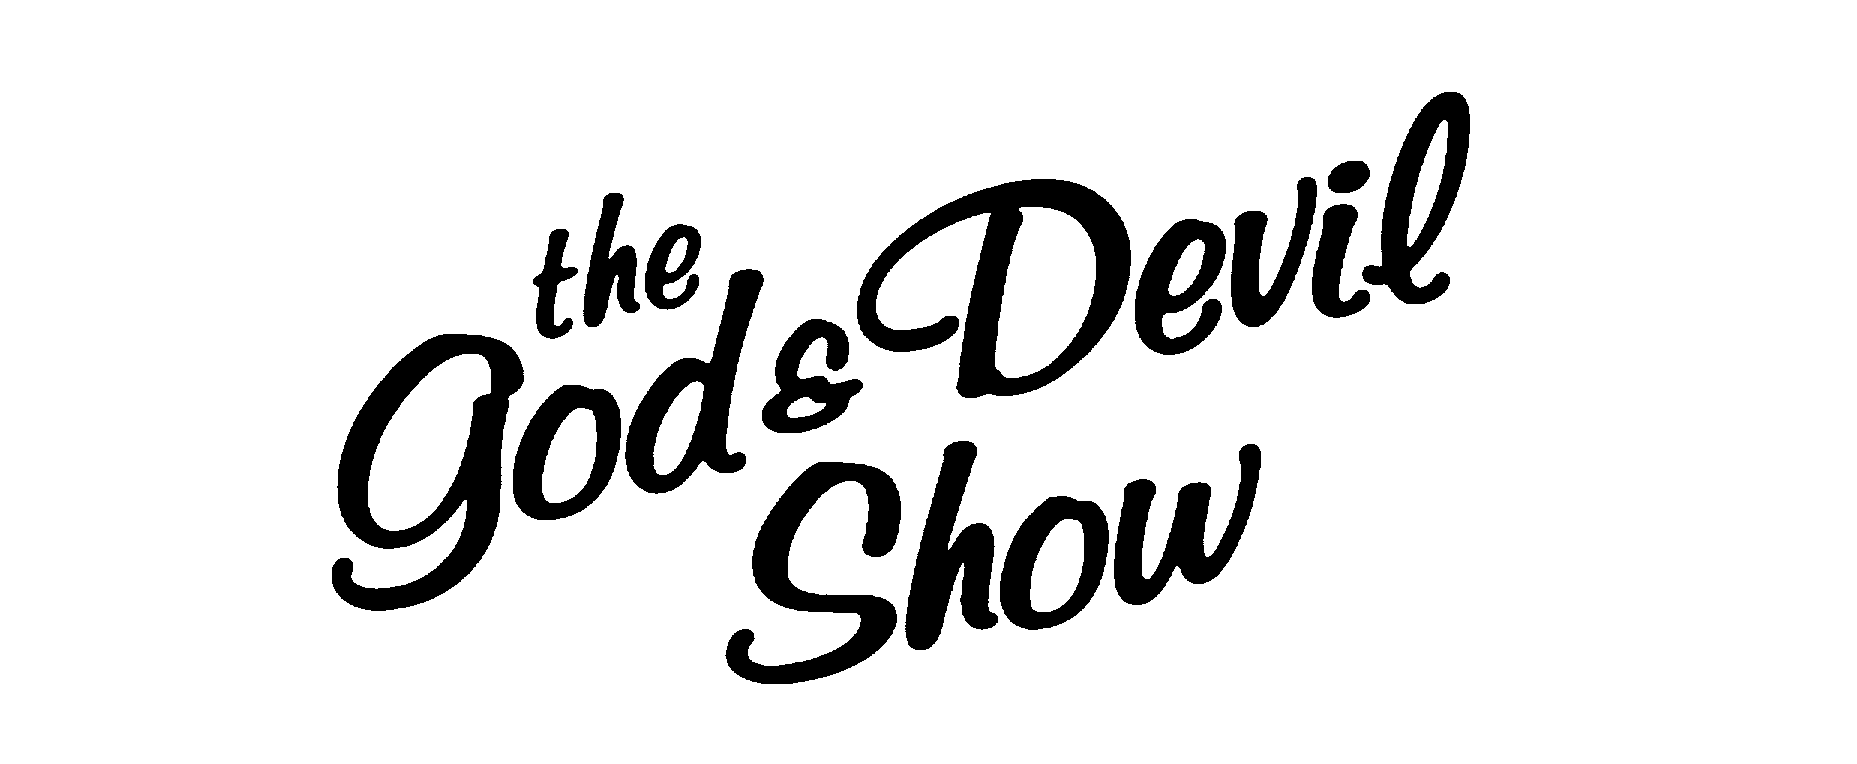  THE GOD &amp; DEVIL SHOW